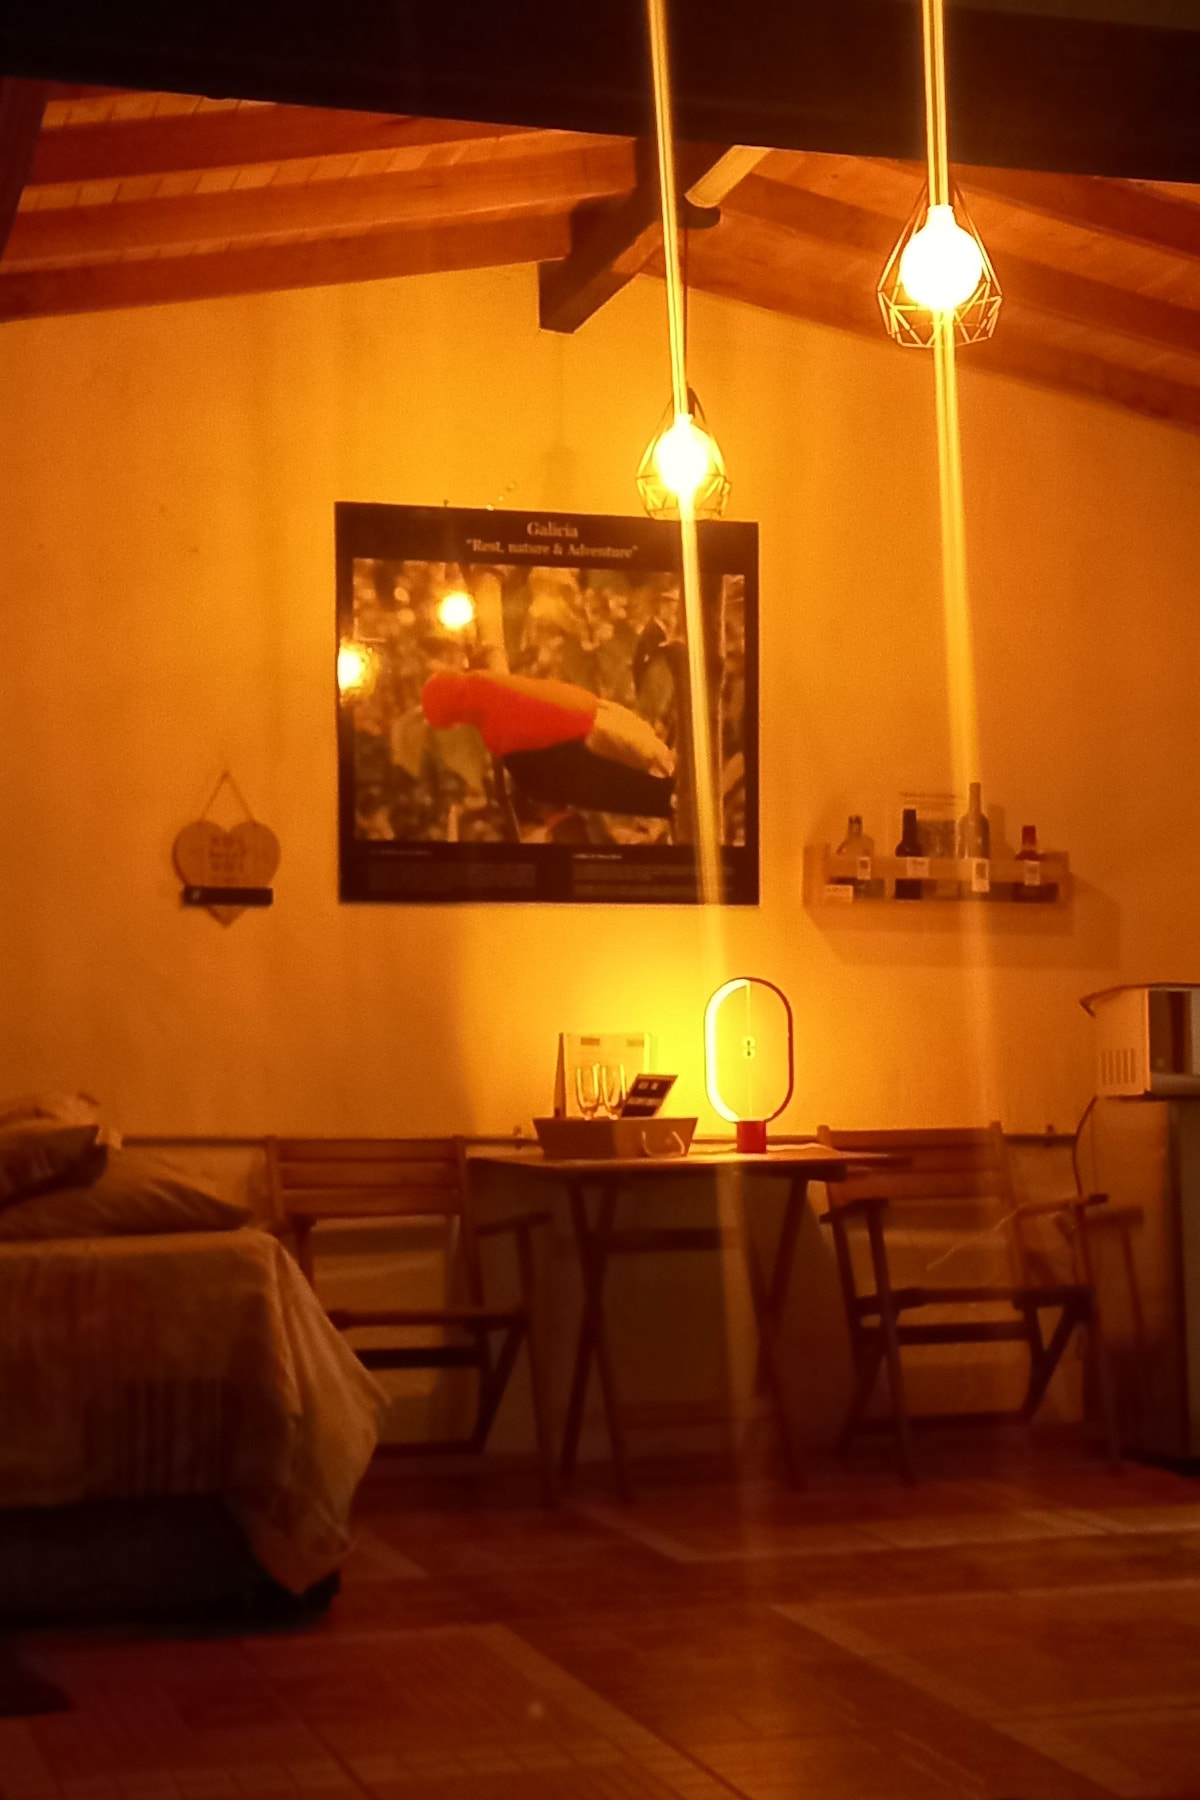 Compostela cabaña privada (private cabin for rent)